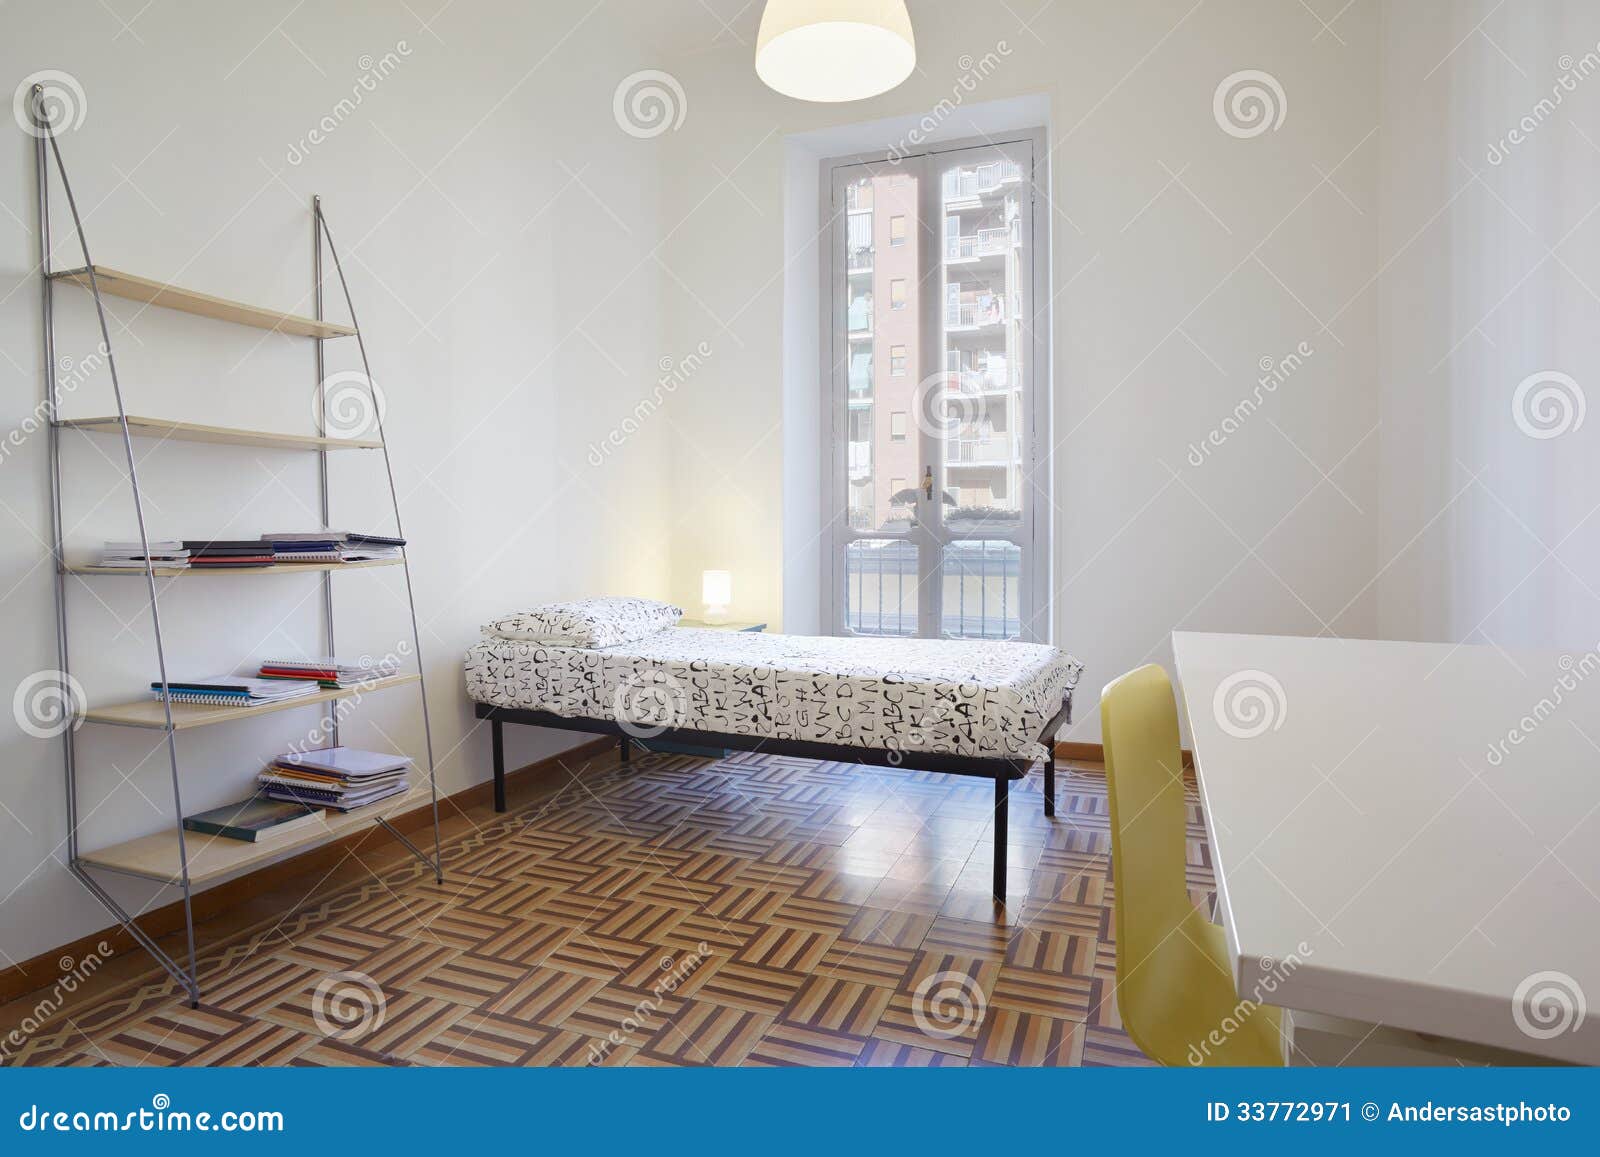 Single Bedroom Simple Room Stock Image Image Of